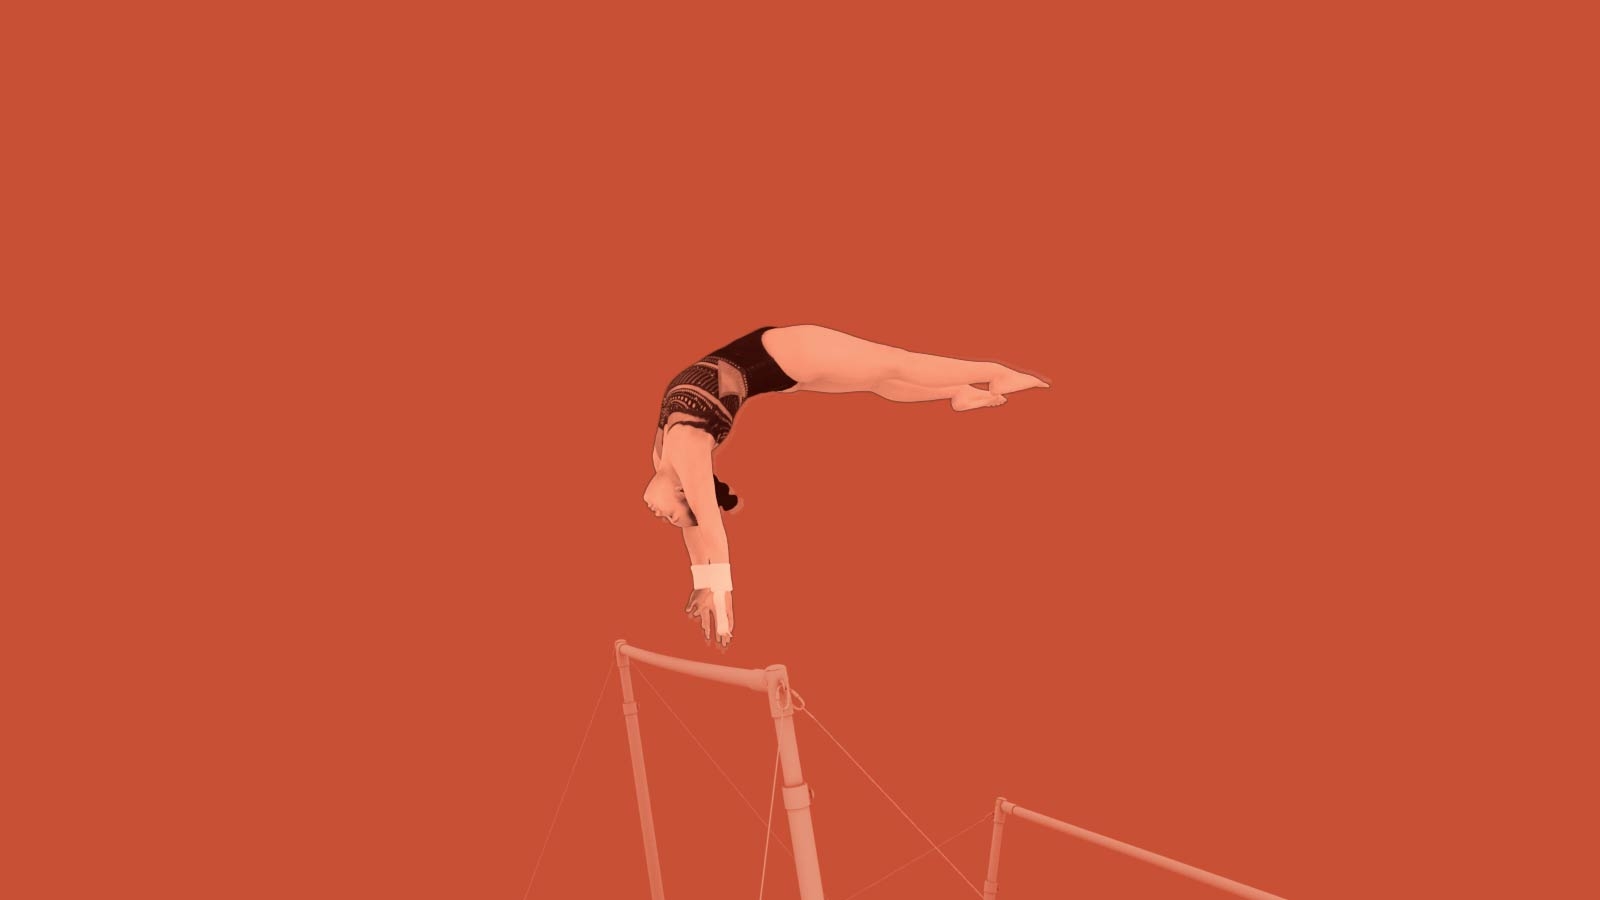 Graphic of American Gymnast Sunisa Lee performing uneven bars